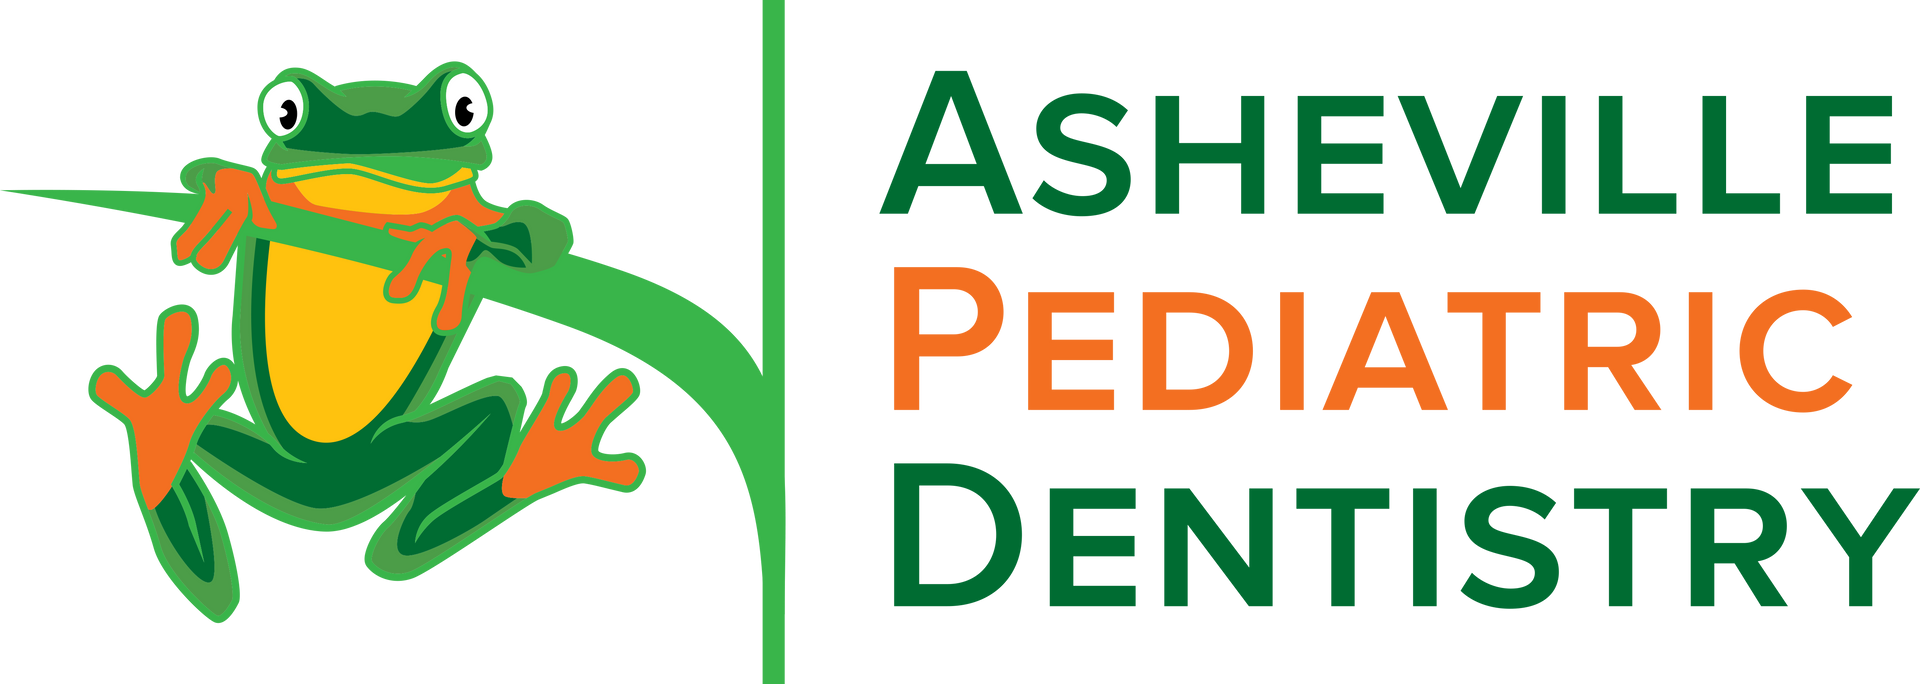 The logo for asheville pediatric dentistry has a frog on it Asheville Pediatric Dentistry (828) 277-6788